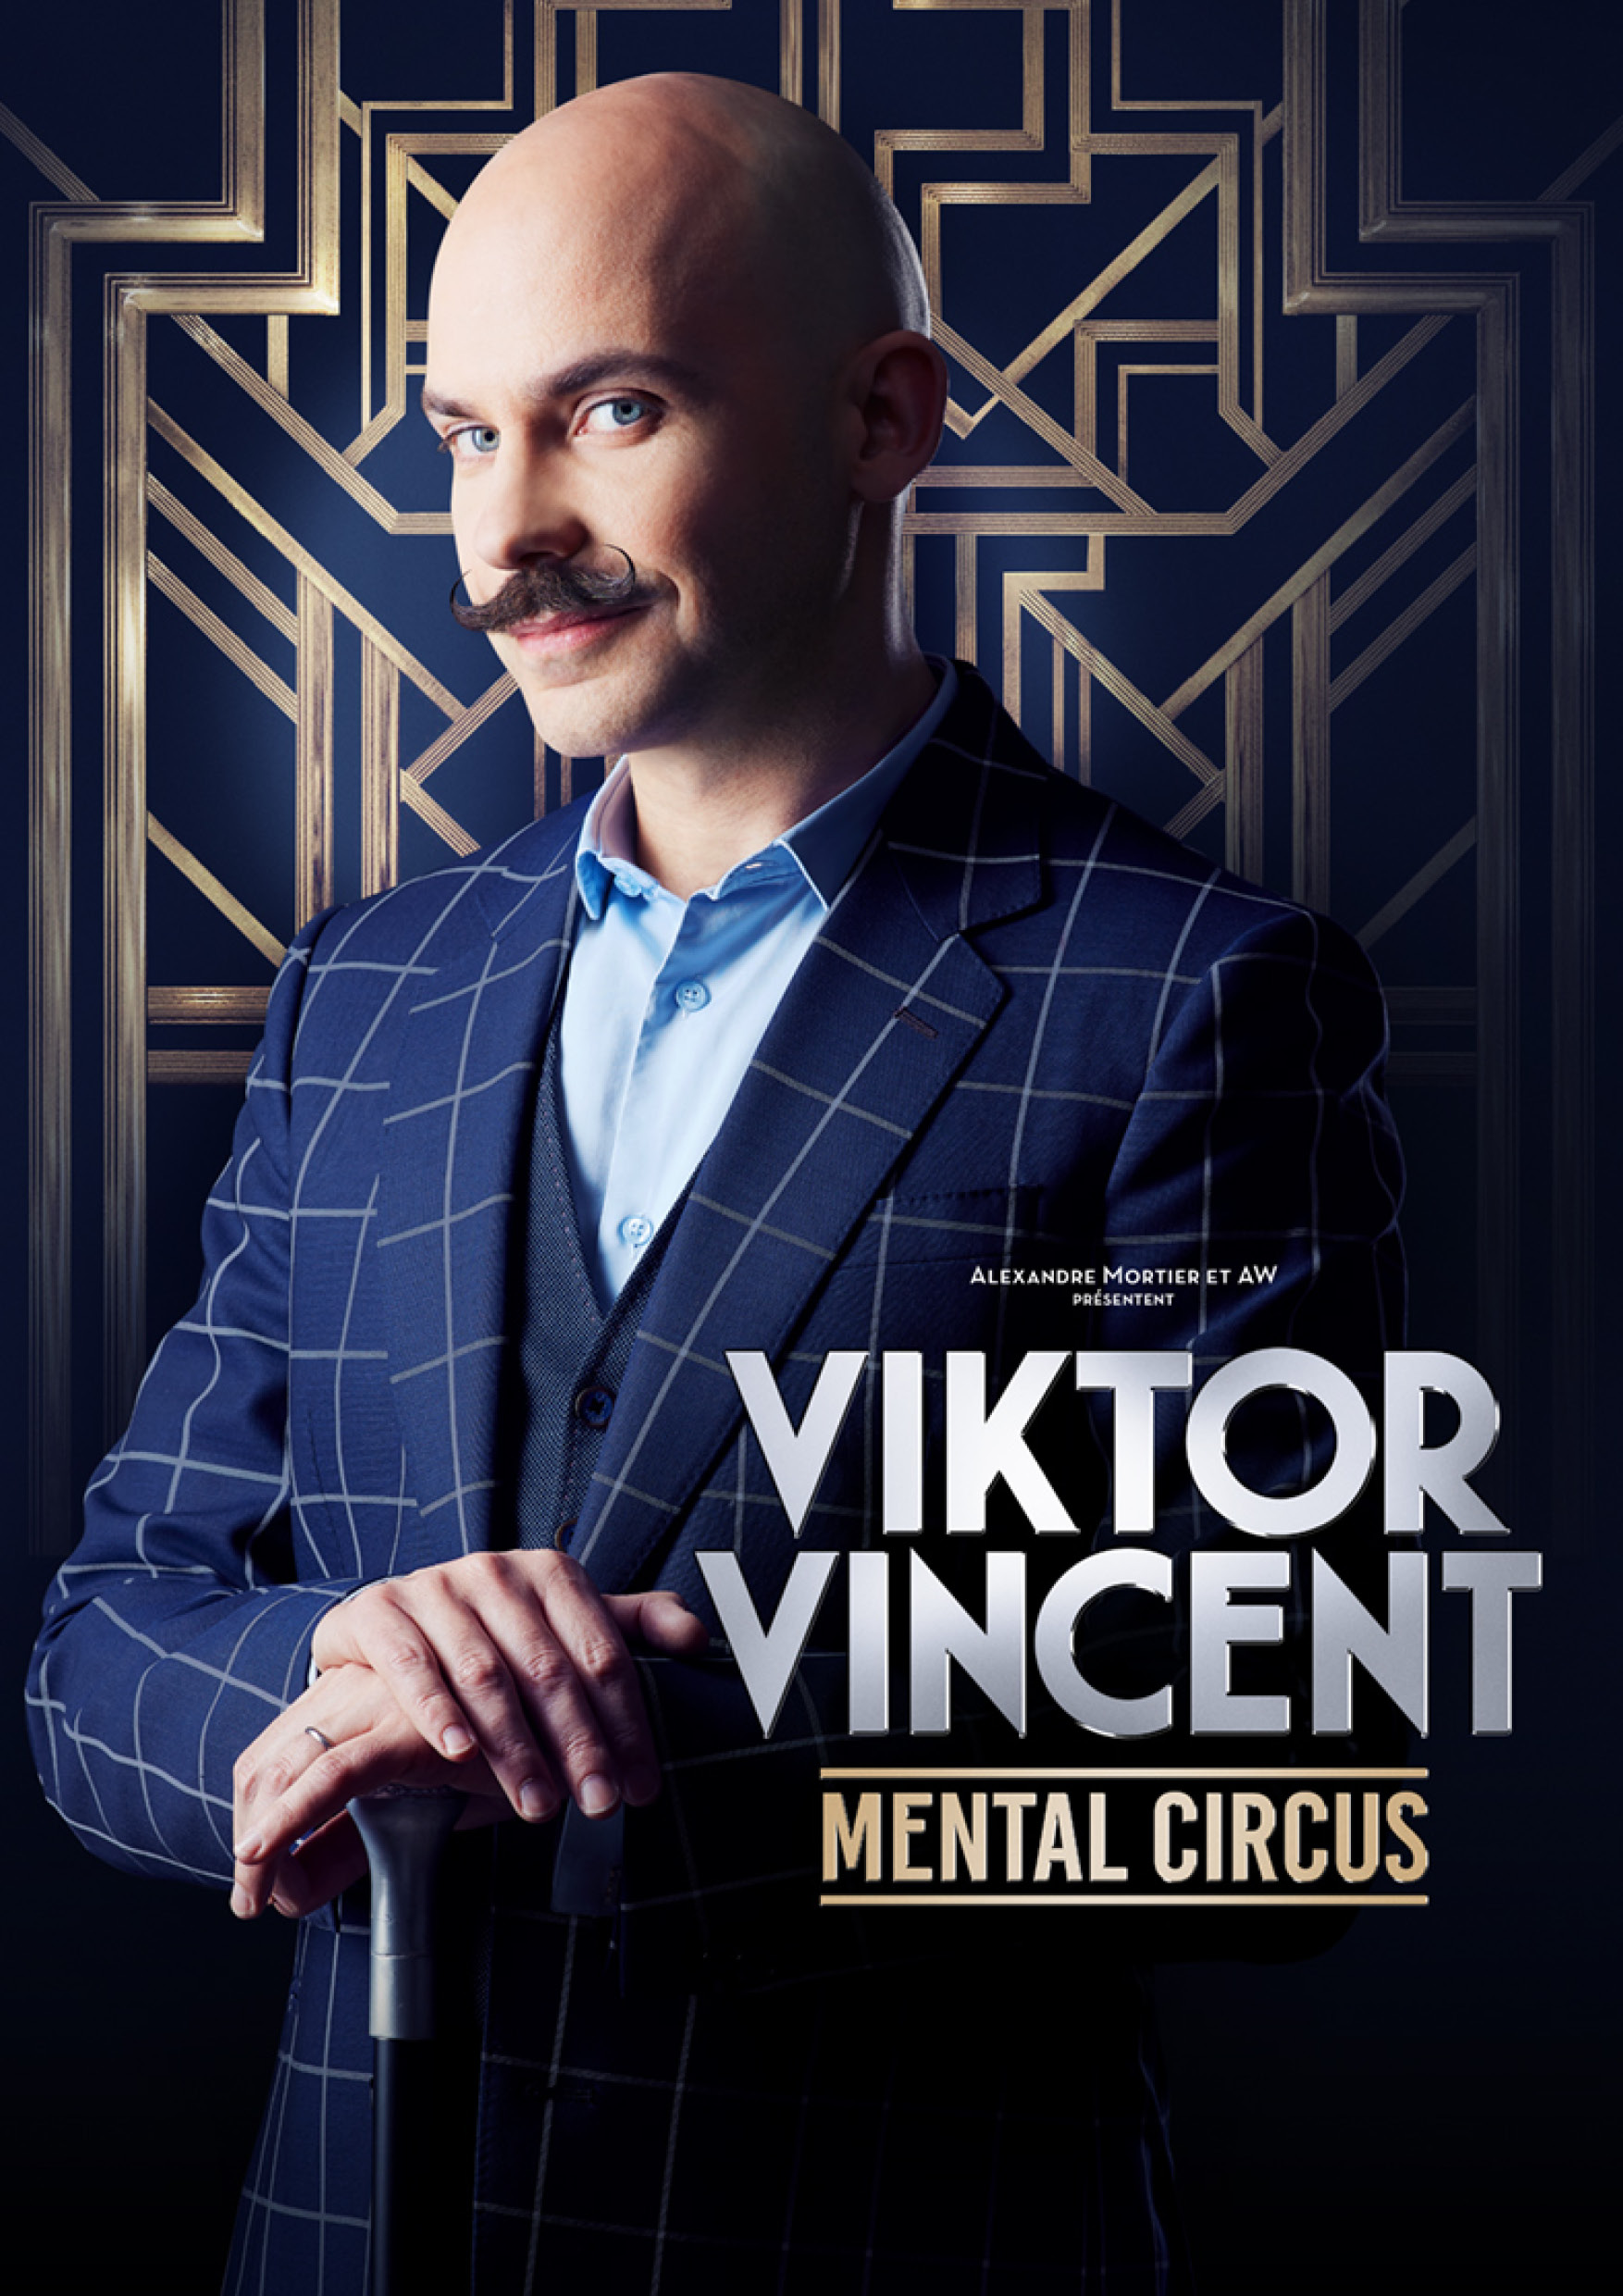 VIKTOR VINCENT "MENTAL CIRCUS"